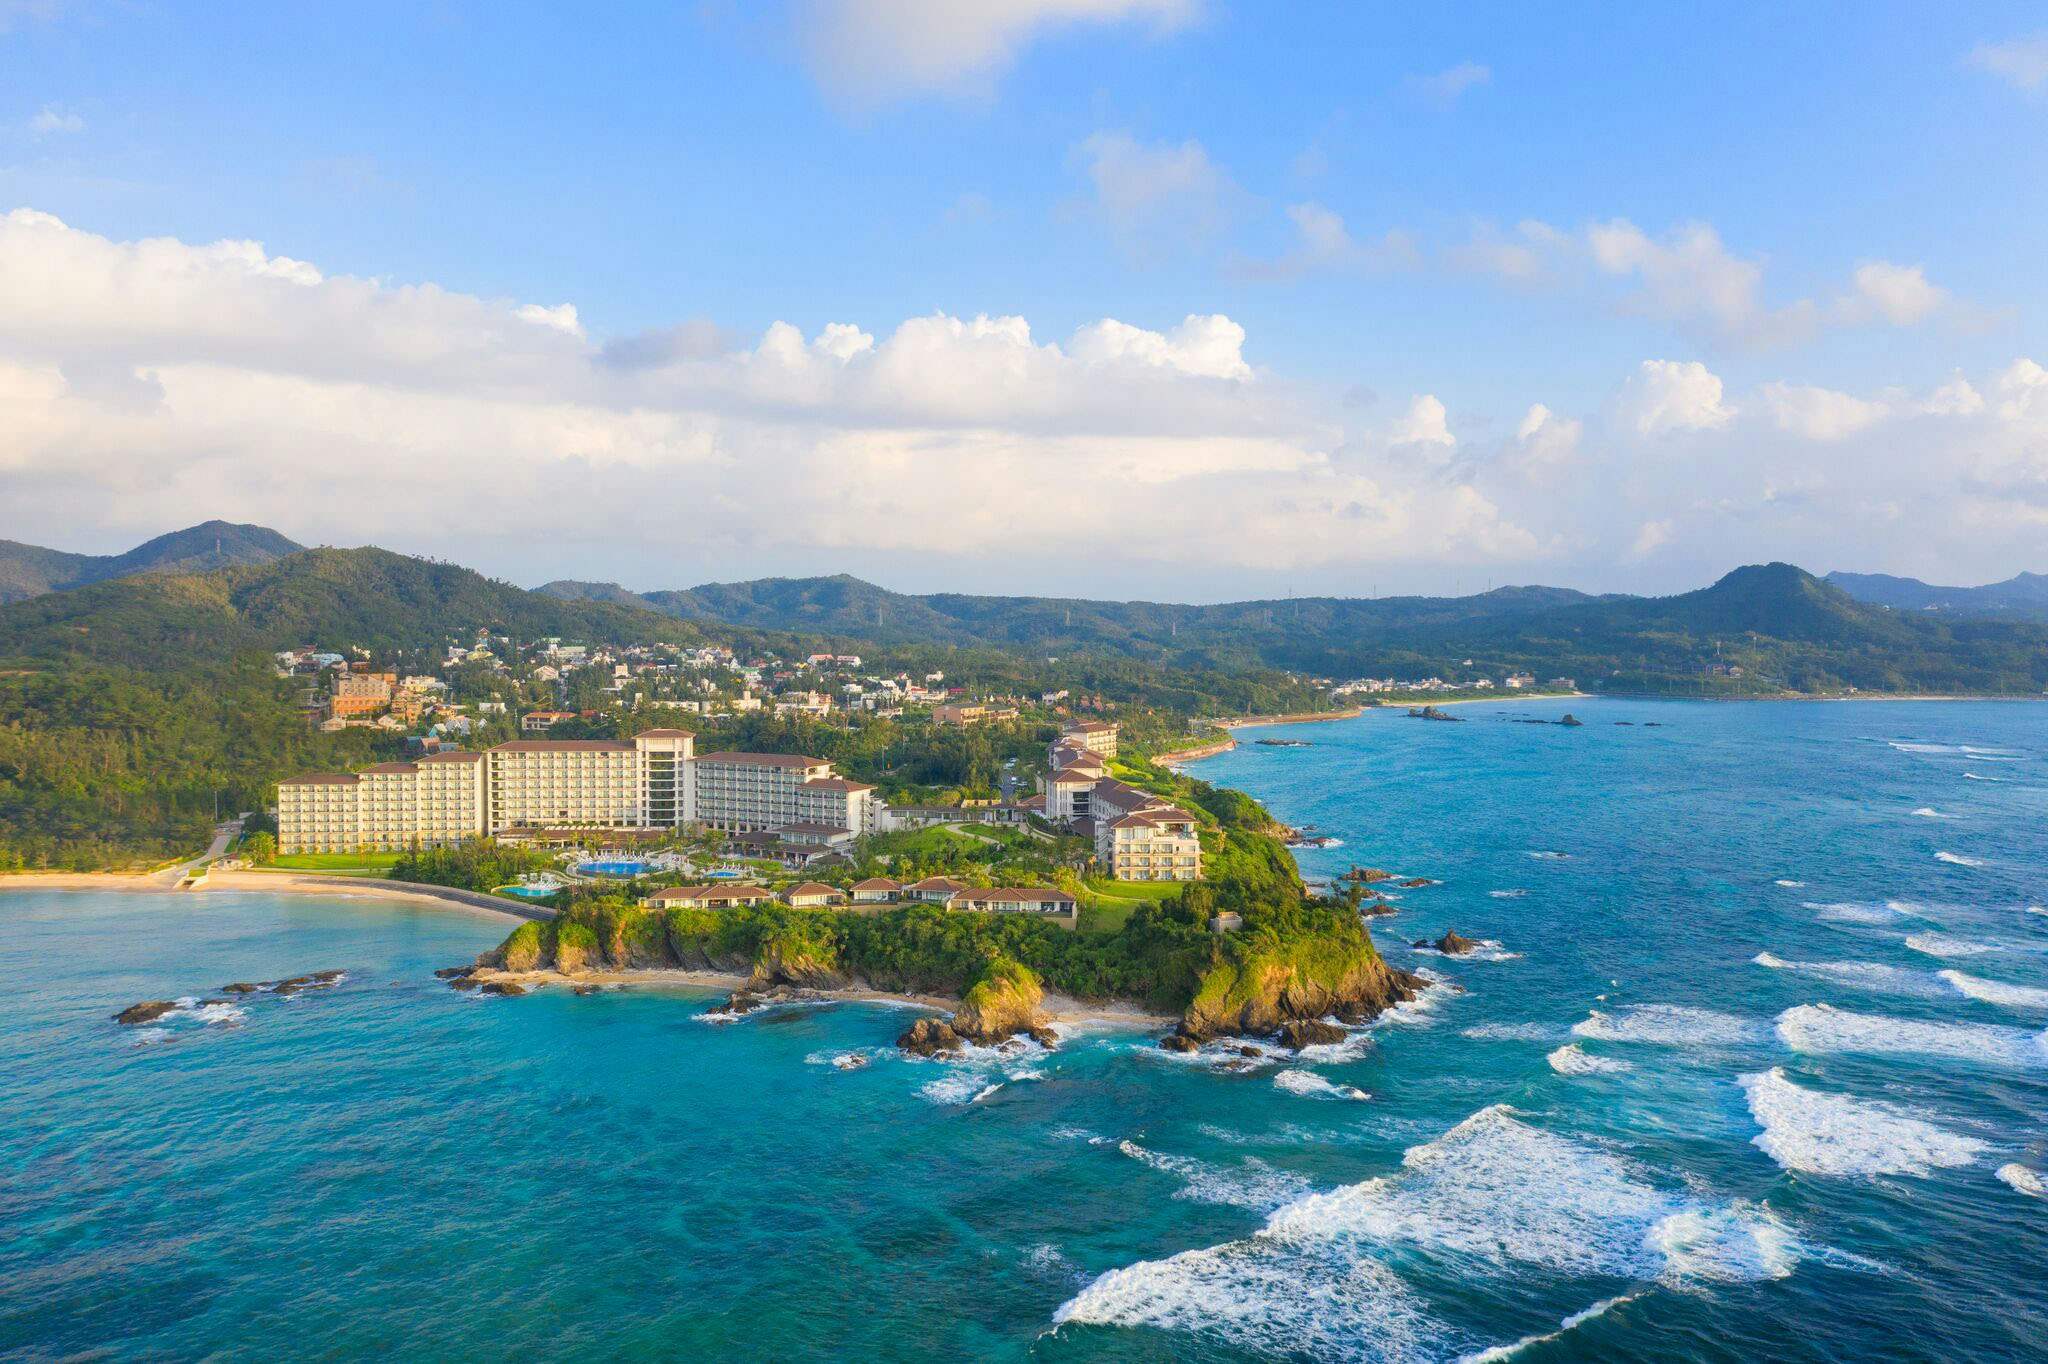 The Halekulani Okinawa is a luxury 360-room hotel